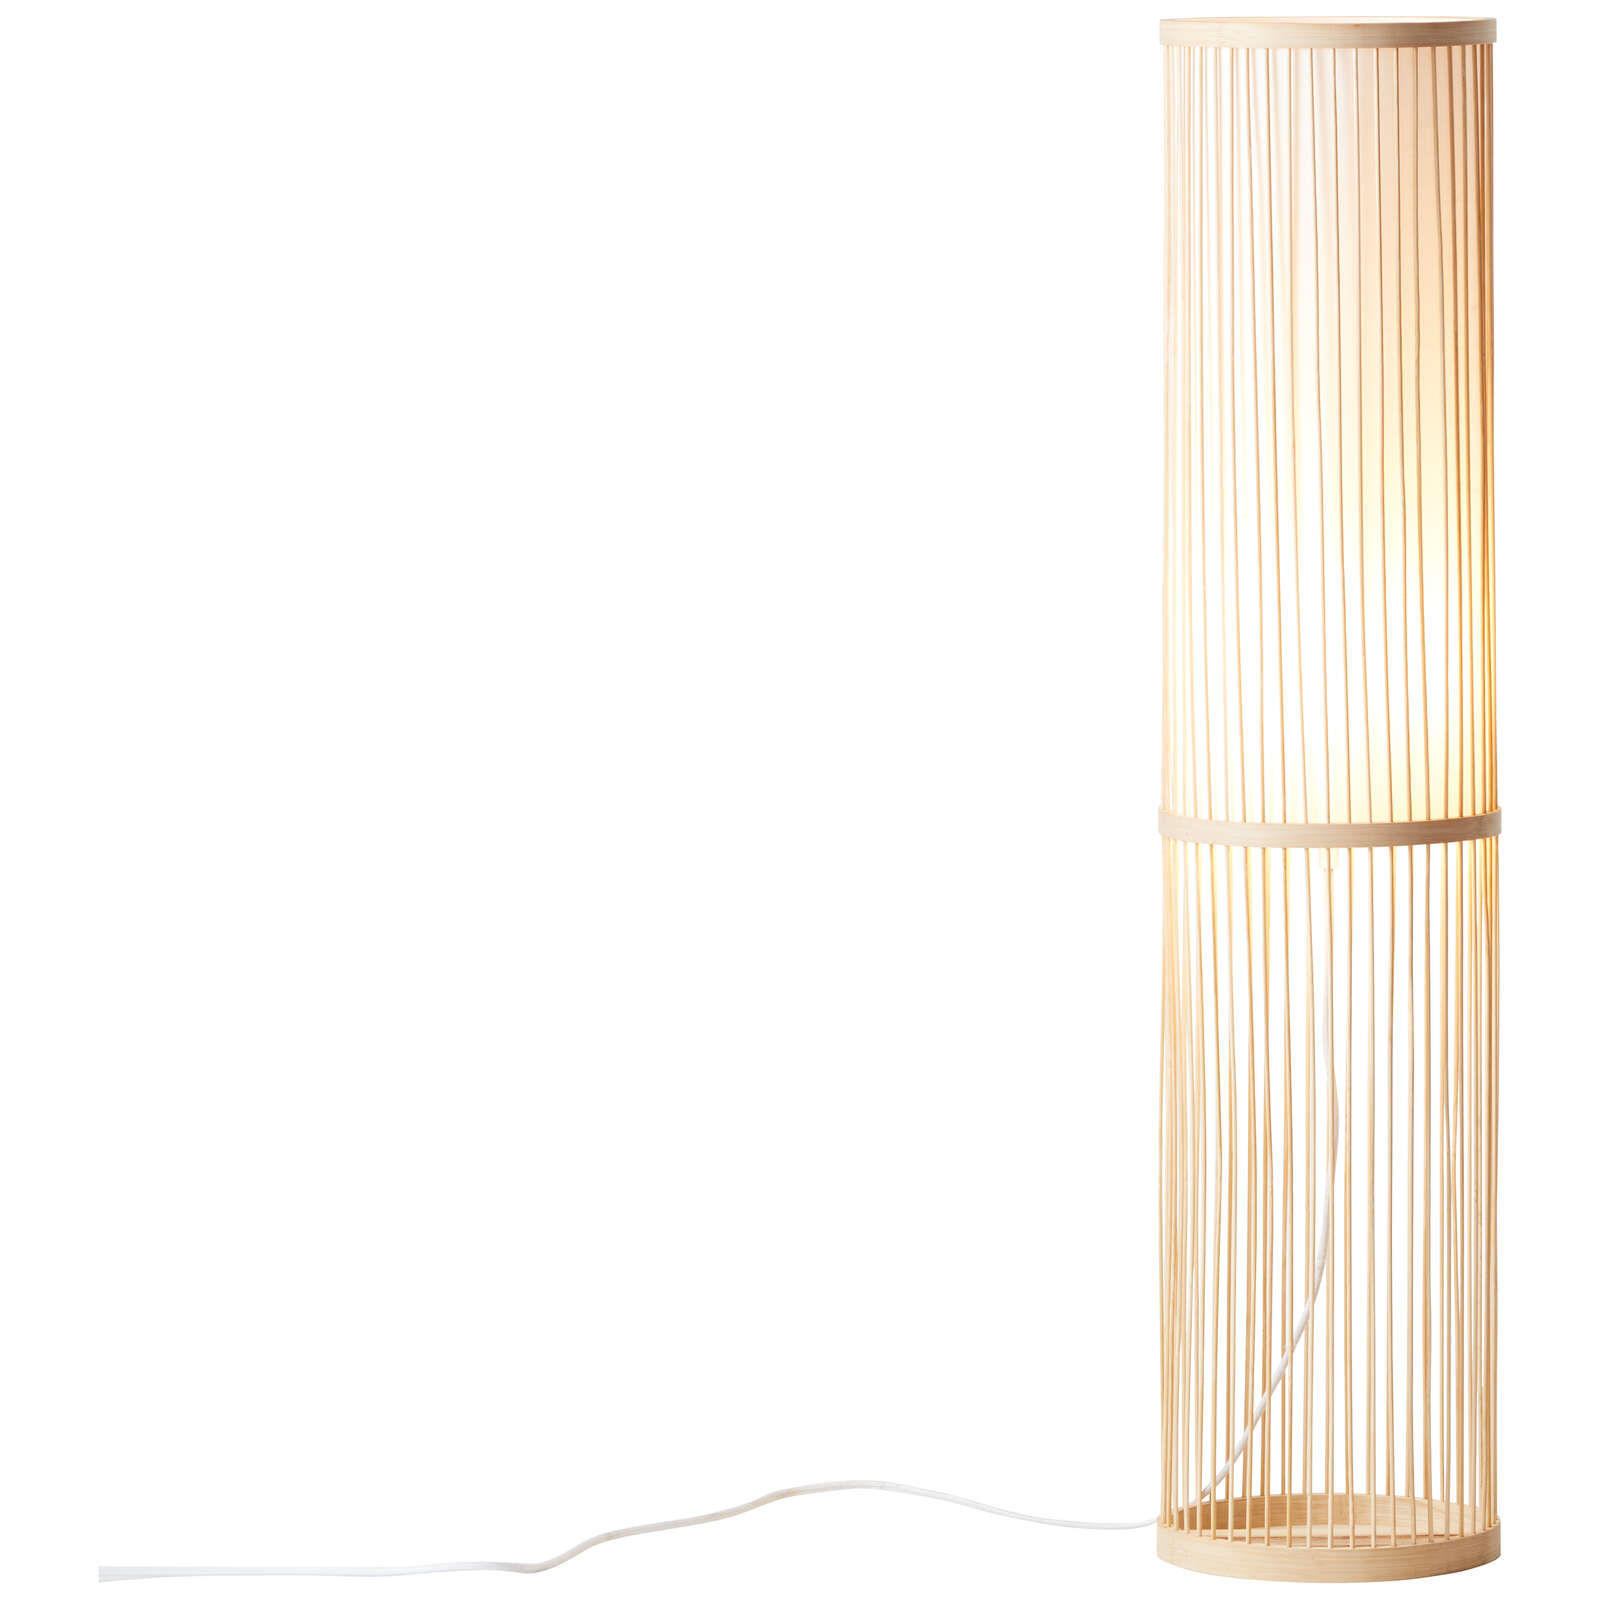             Lámpara de pie de bambú - Luise 1 - Marrón
        